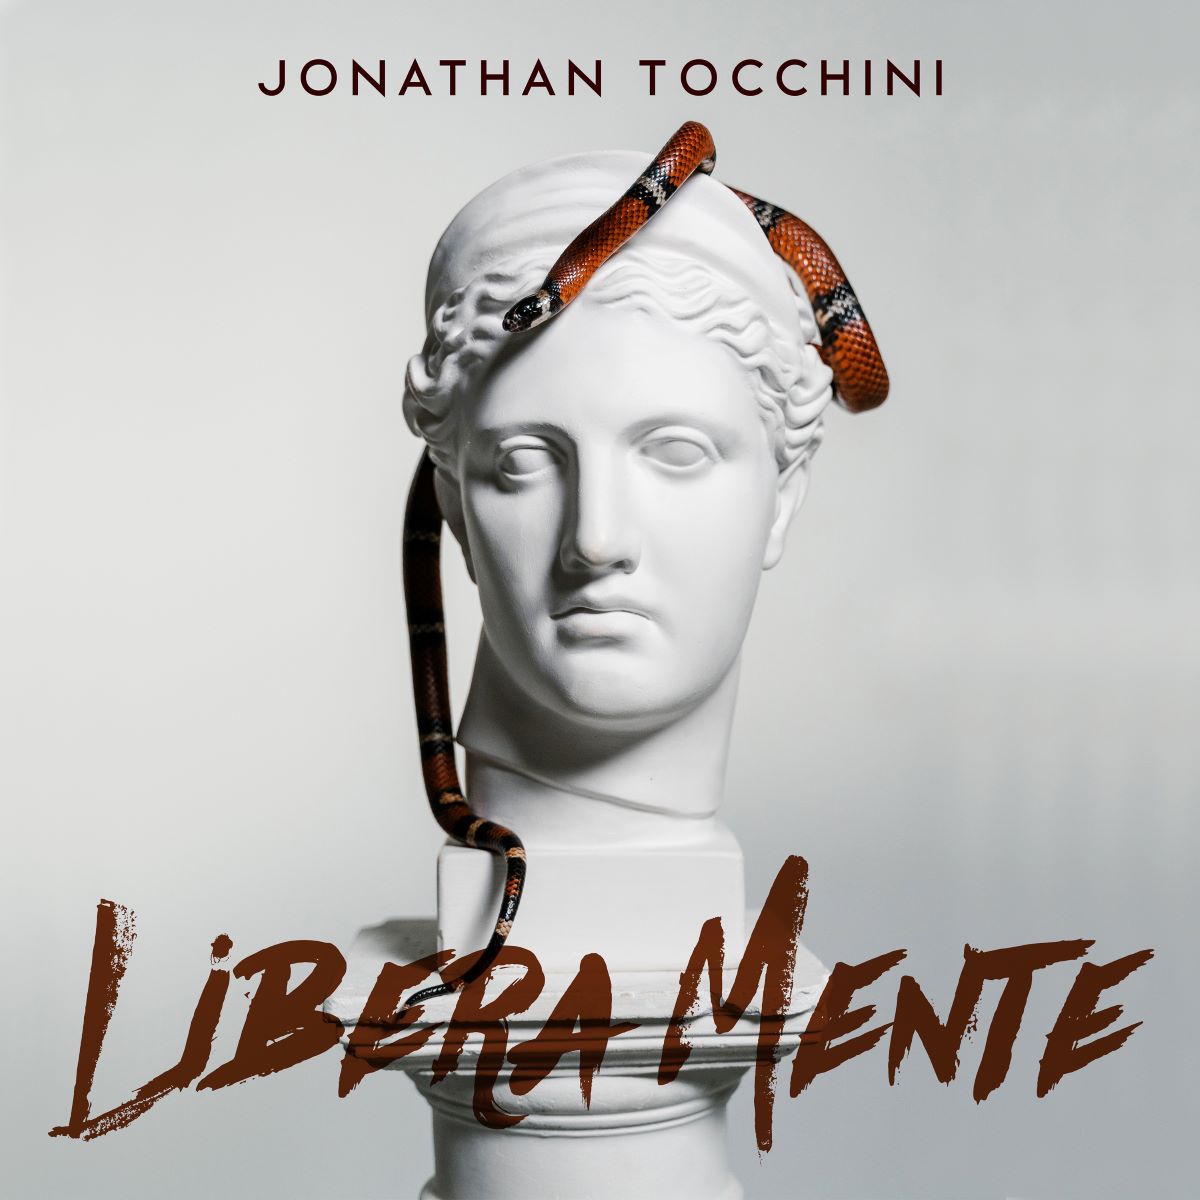 Jonathan Tocchini - “Libera Mente”